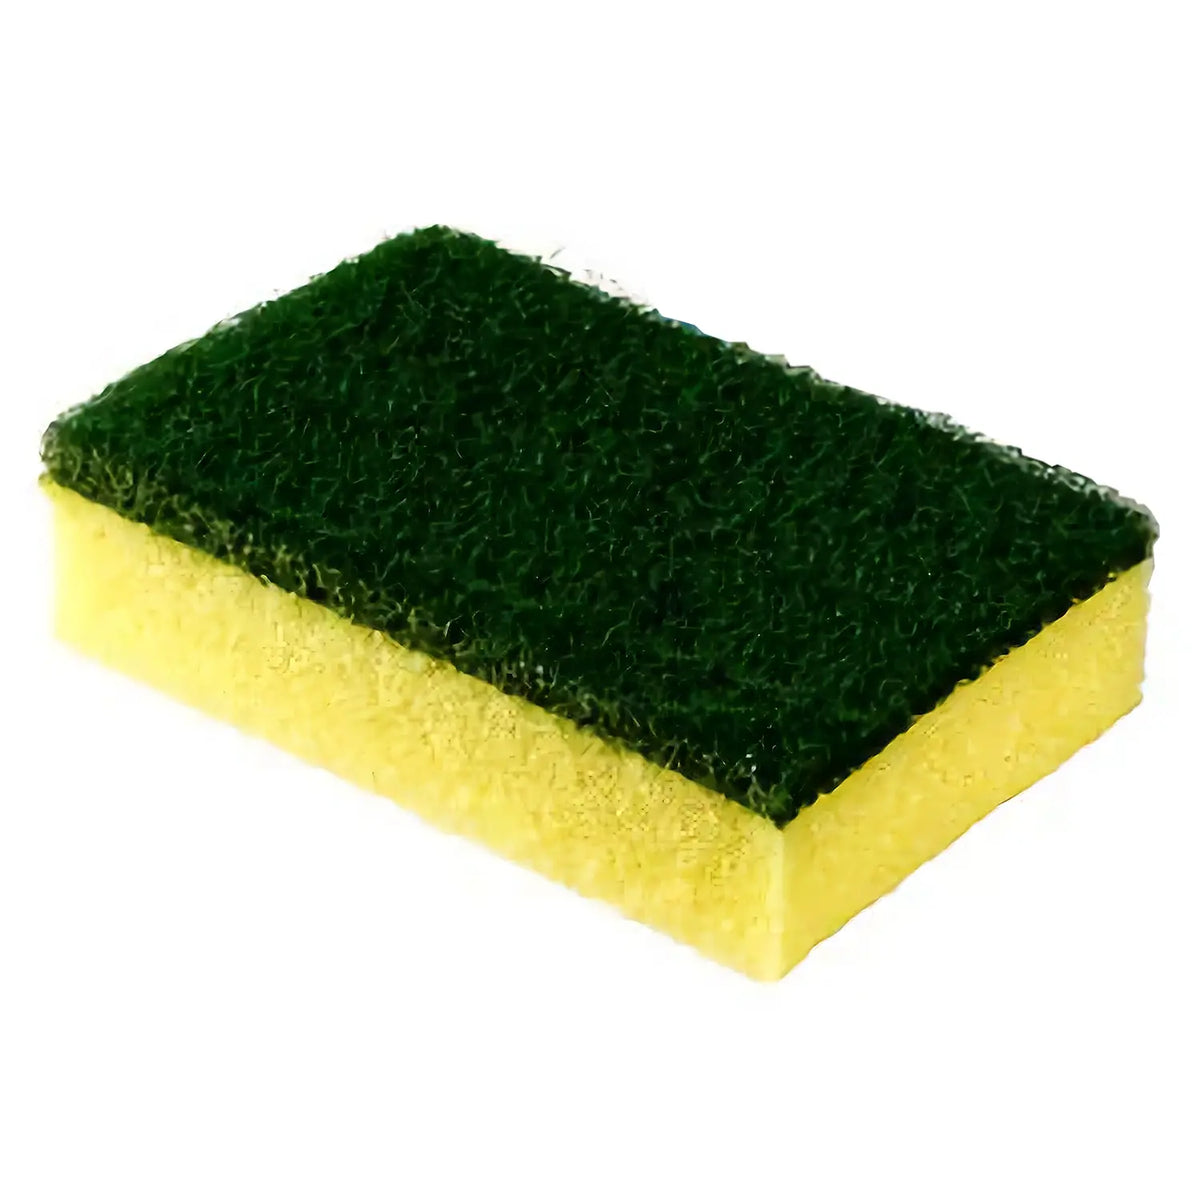 3M Nylon Cleaning Sponge